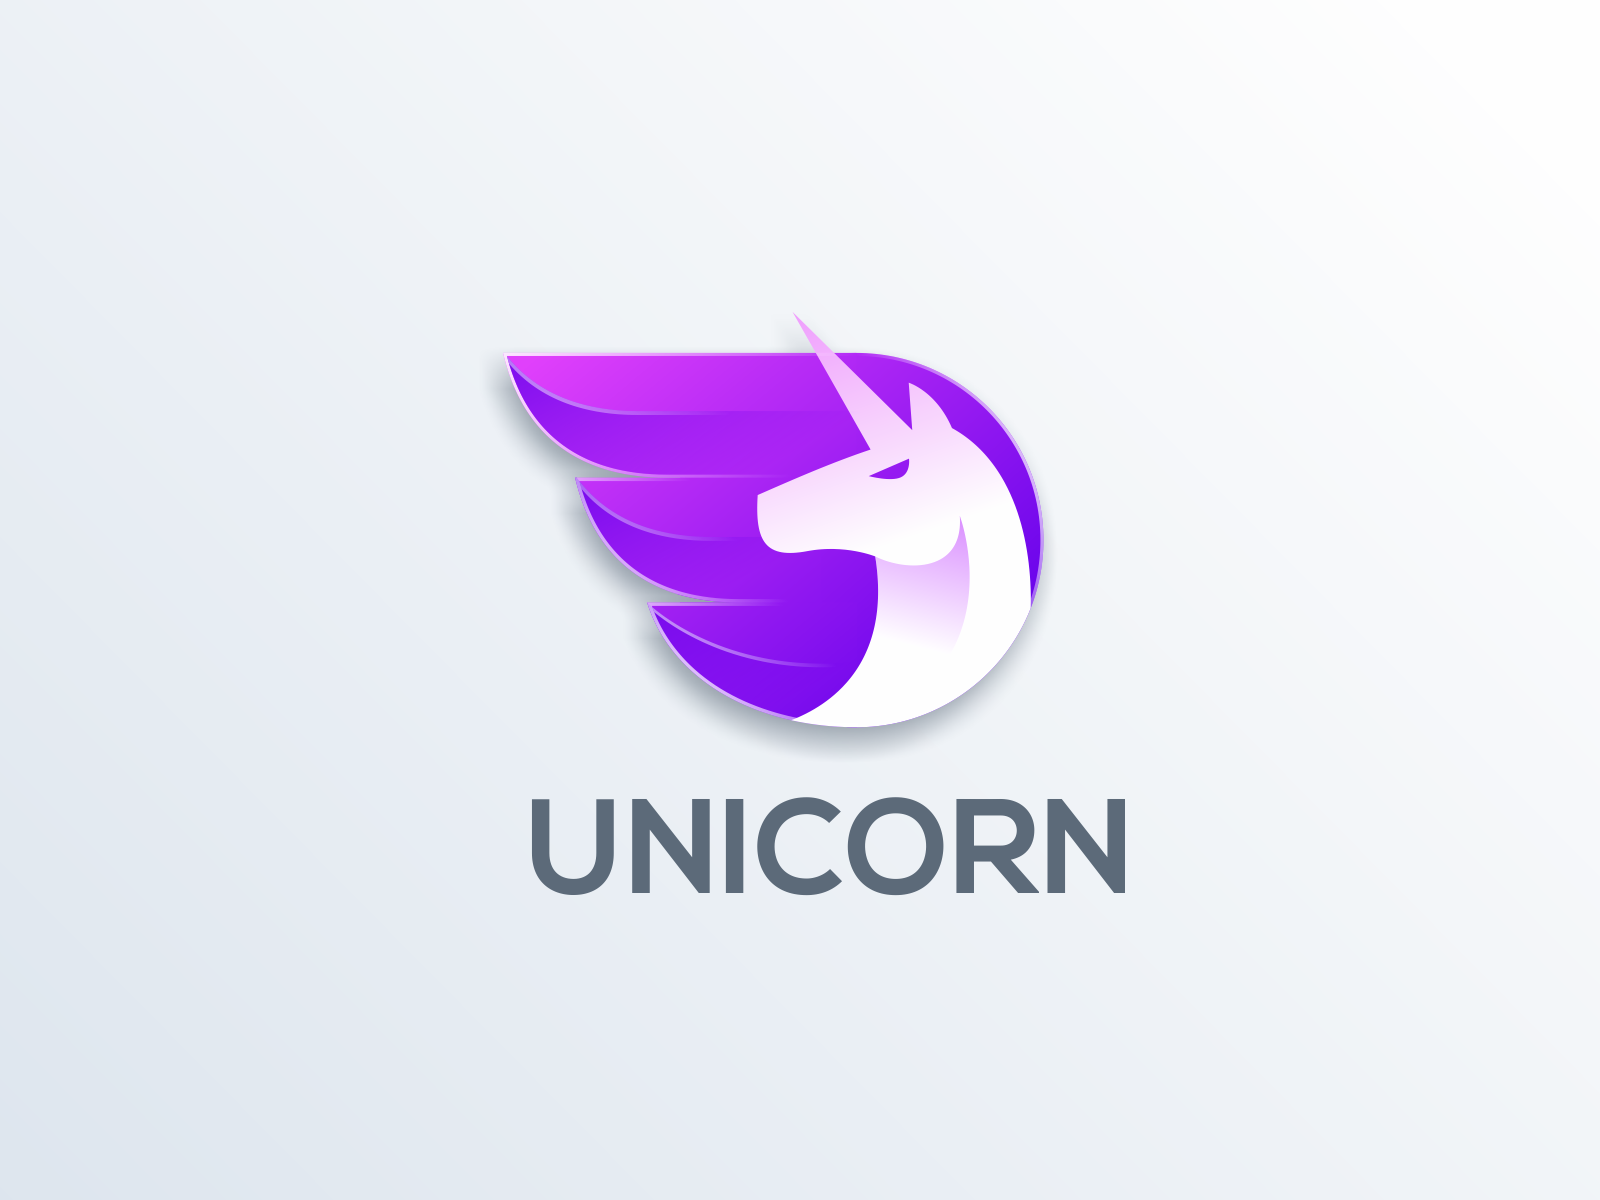 Unicorn logo design by Lelevien on Dribbble